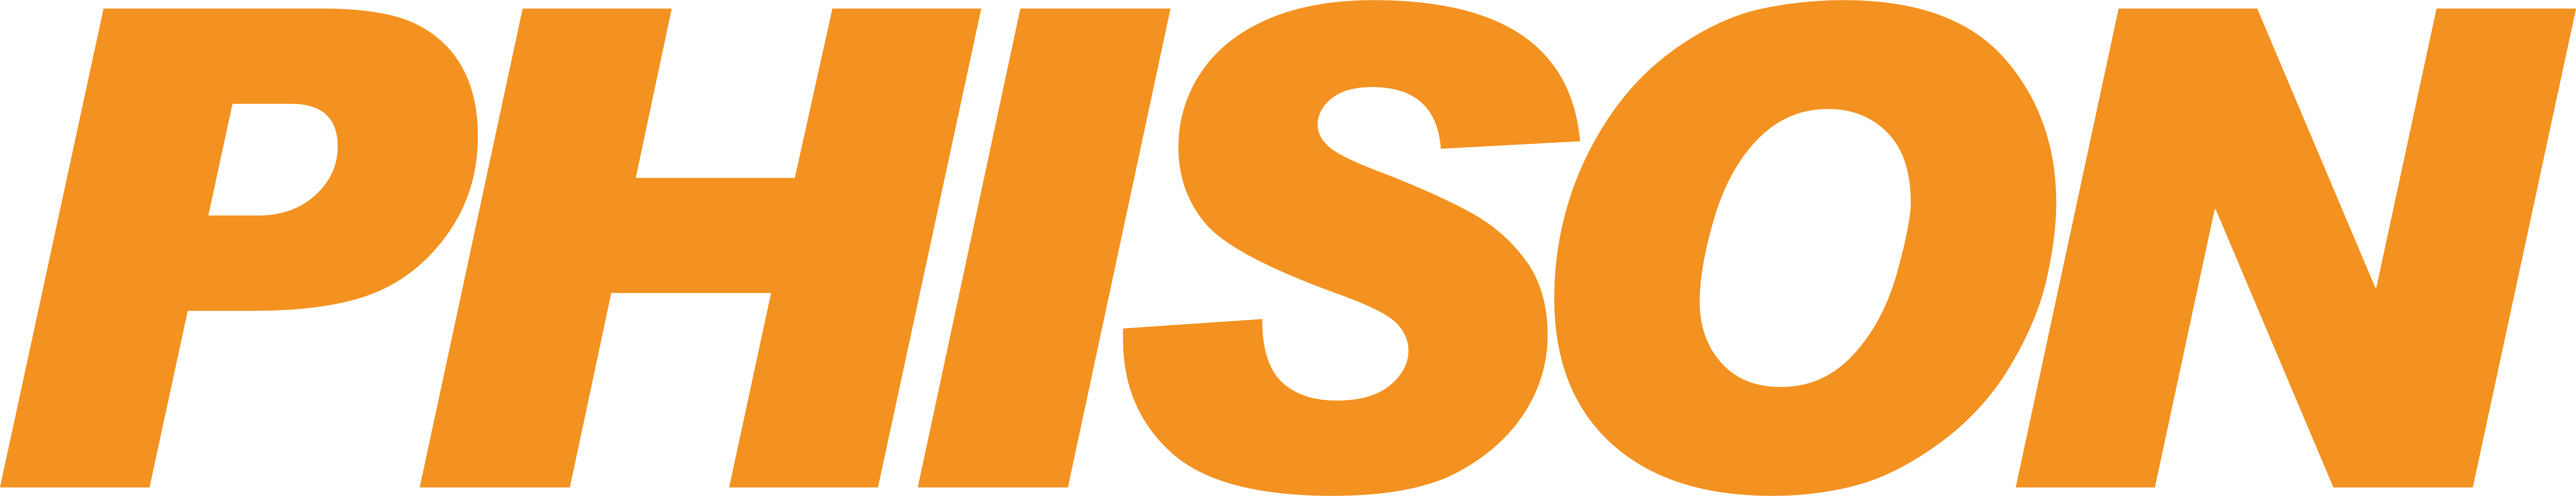 Phison-logo